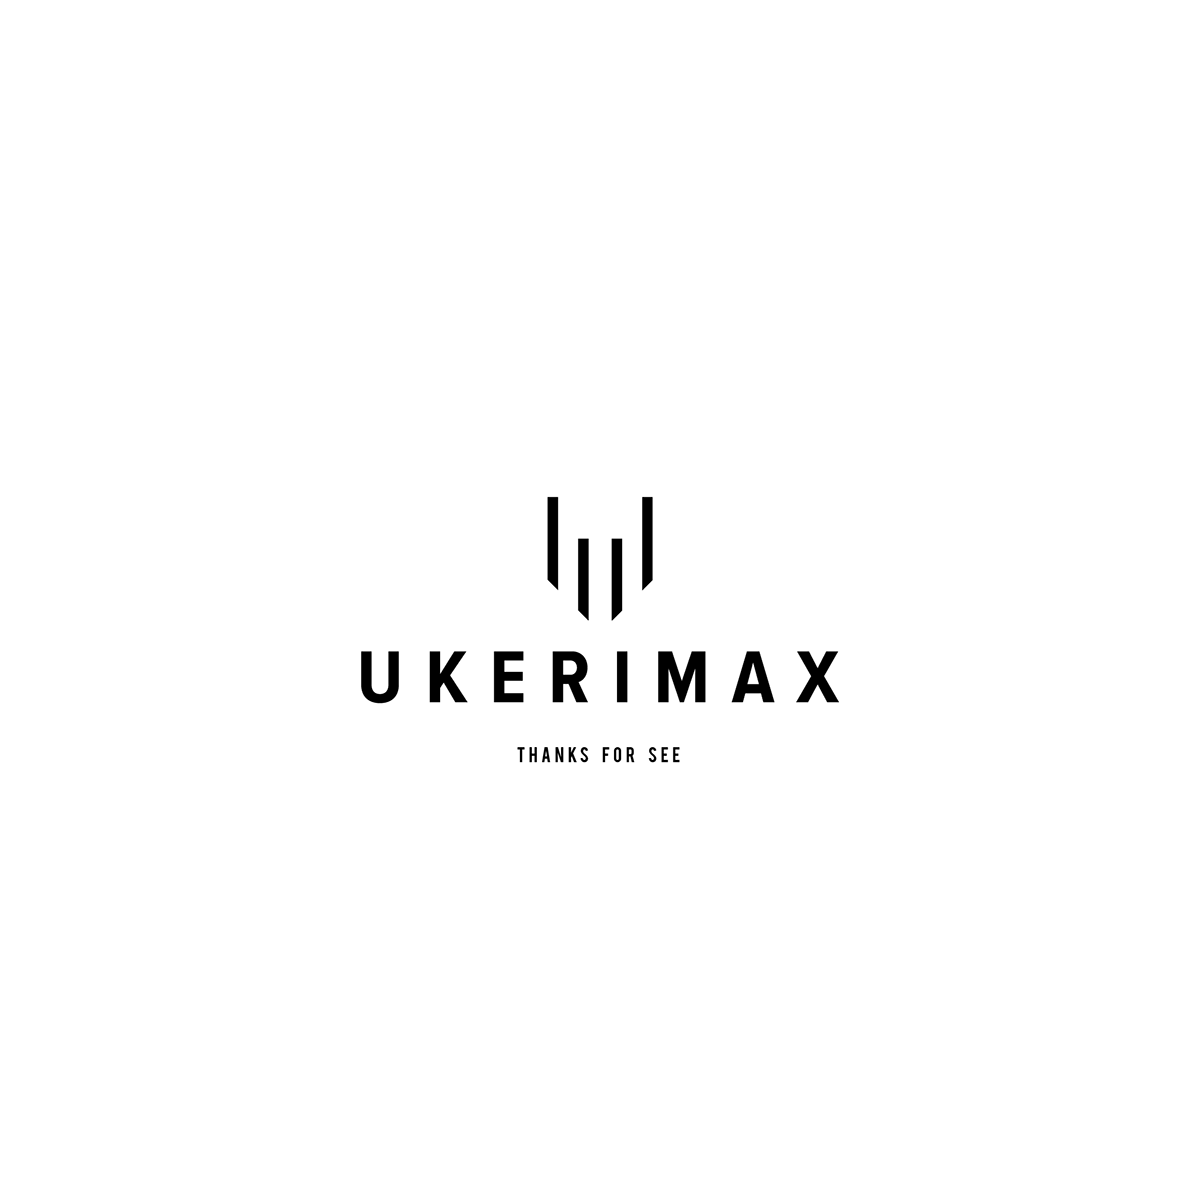 ukerimax logo media art